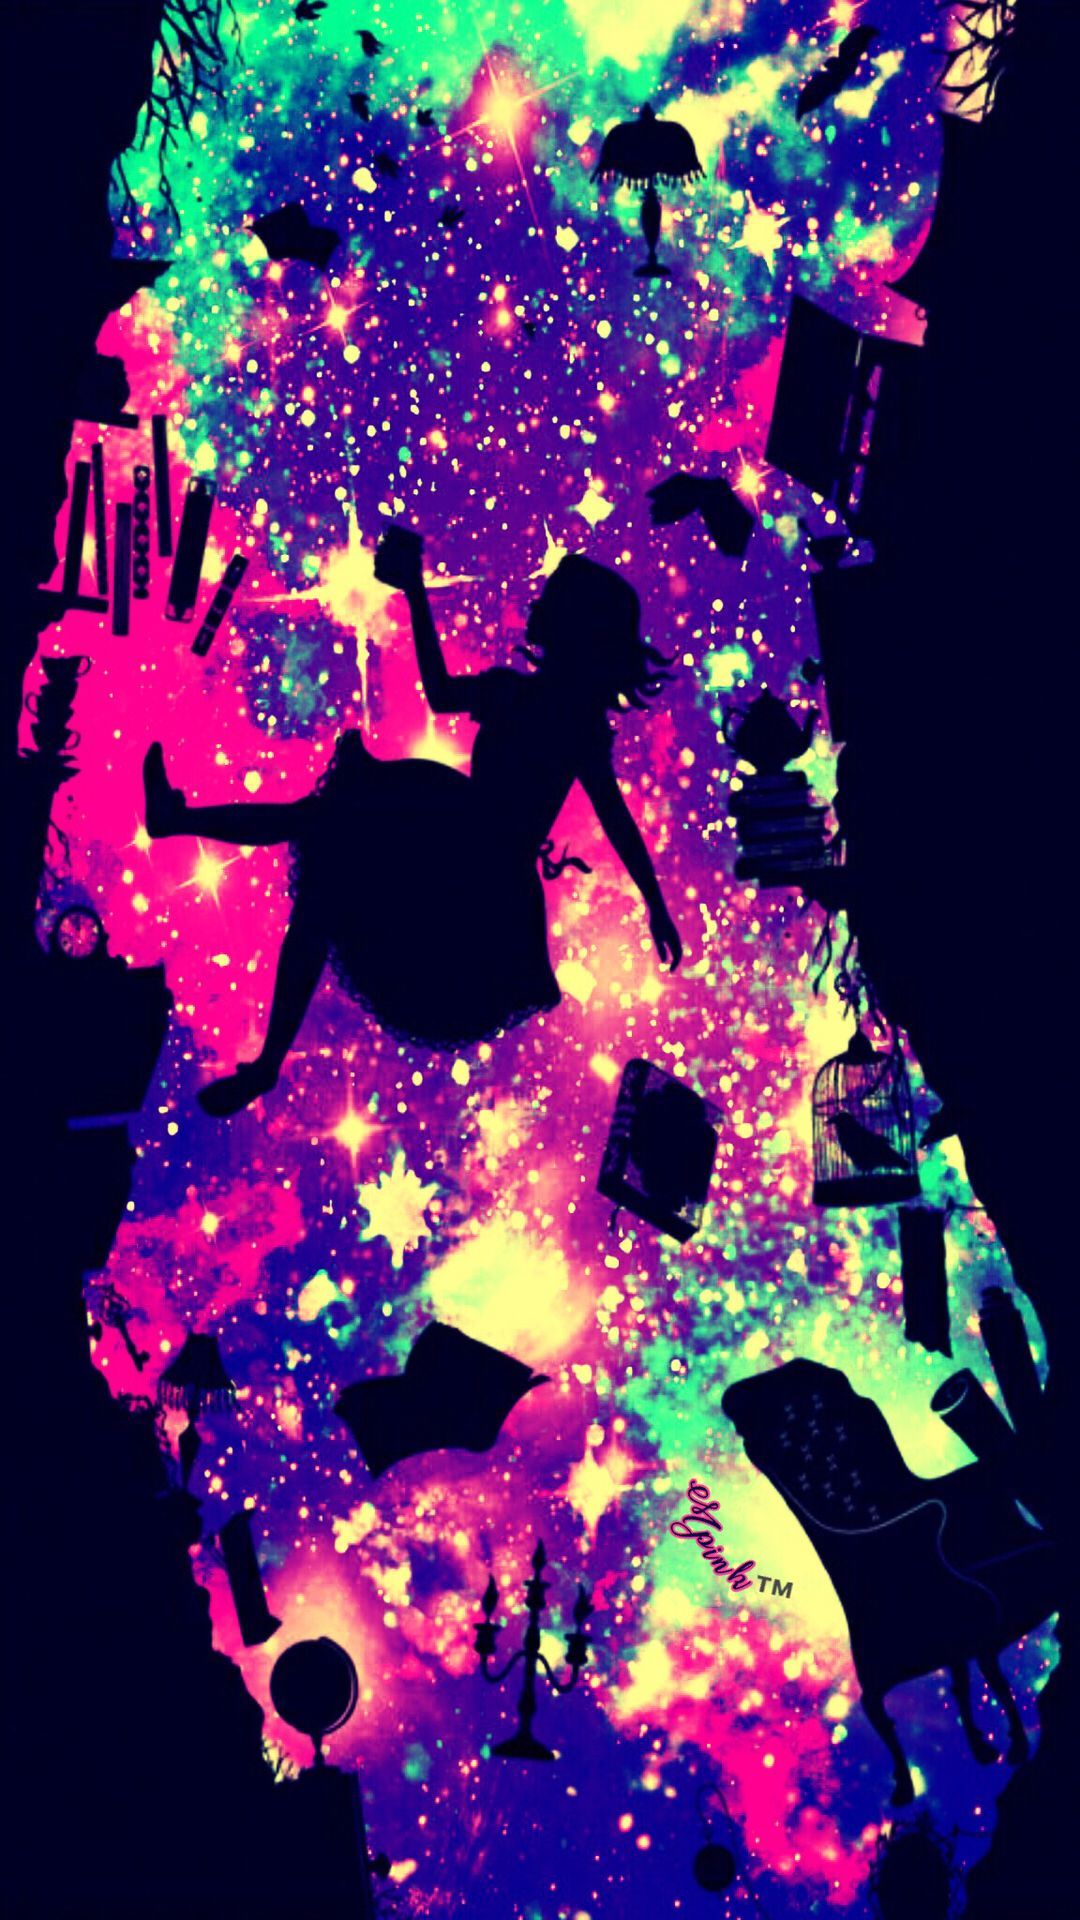  Alice Im Wunderland Hintergrundbild 1080x1920. Alice And Wonderland Galaxy Wallpaper #wallpaper #galaxy #sparkle #glitter #lockscreen #pretty. Alice in wonderland background, Galaxy wallpaper, Trippy wallpaper